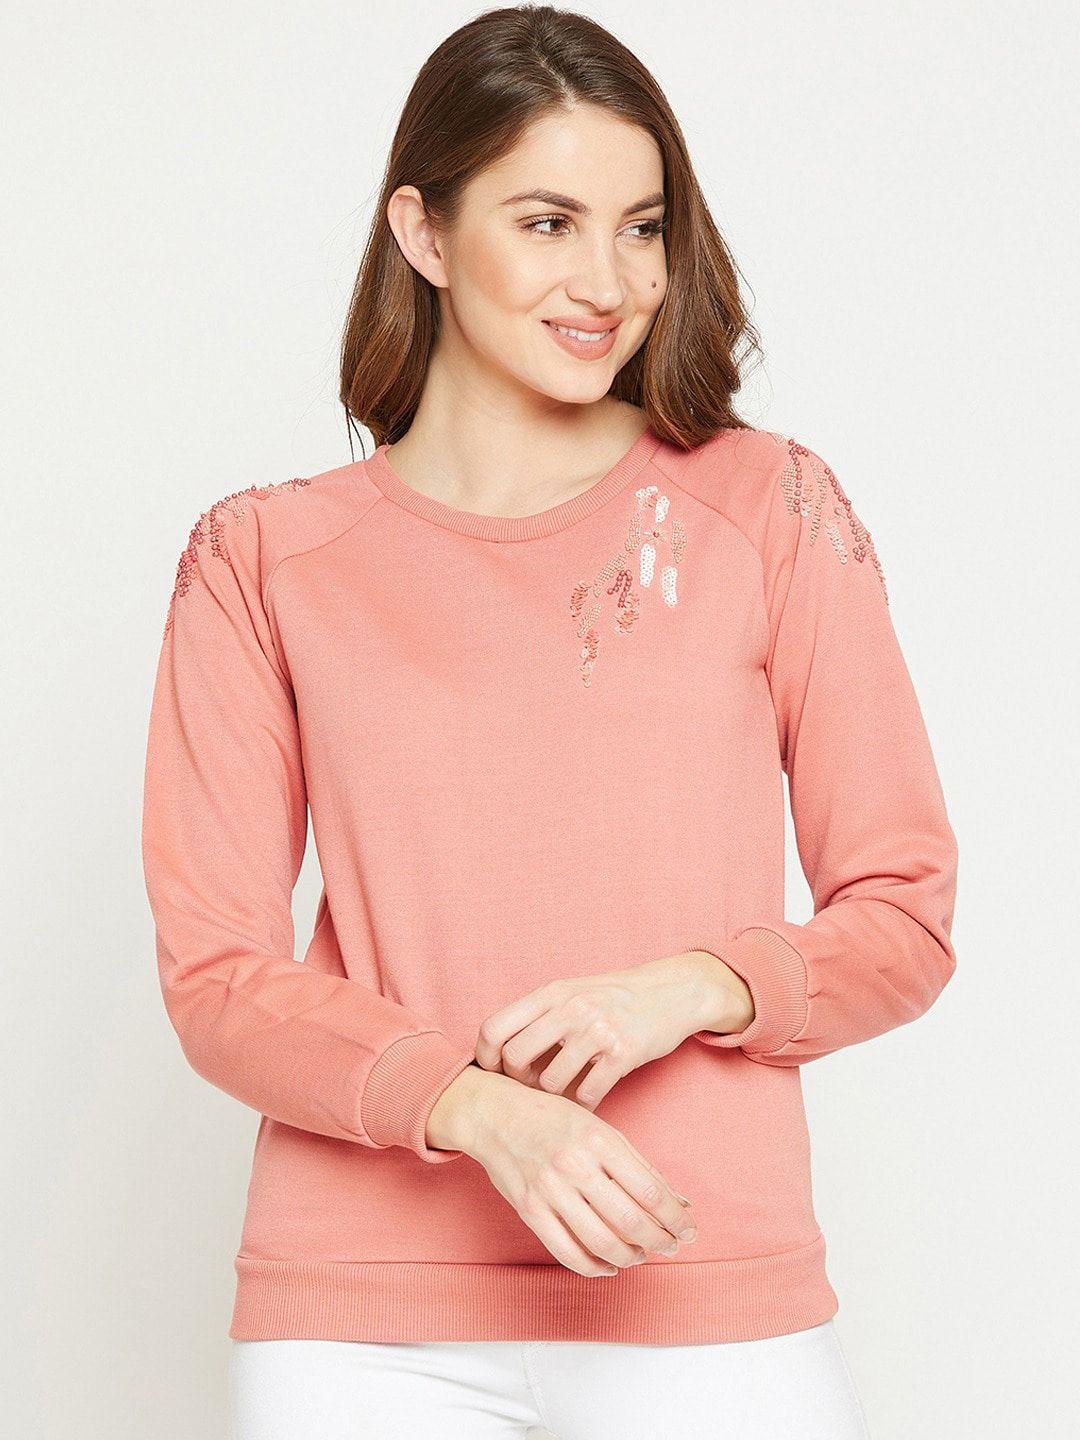 carlton-london-women-pink-solid-sweatshirt